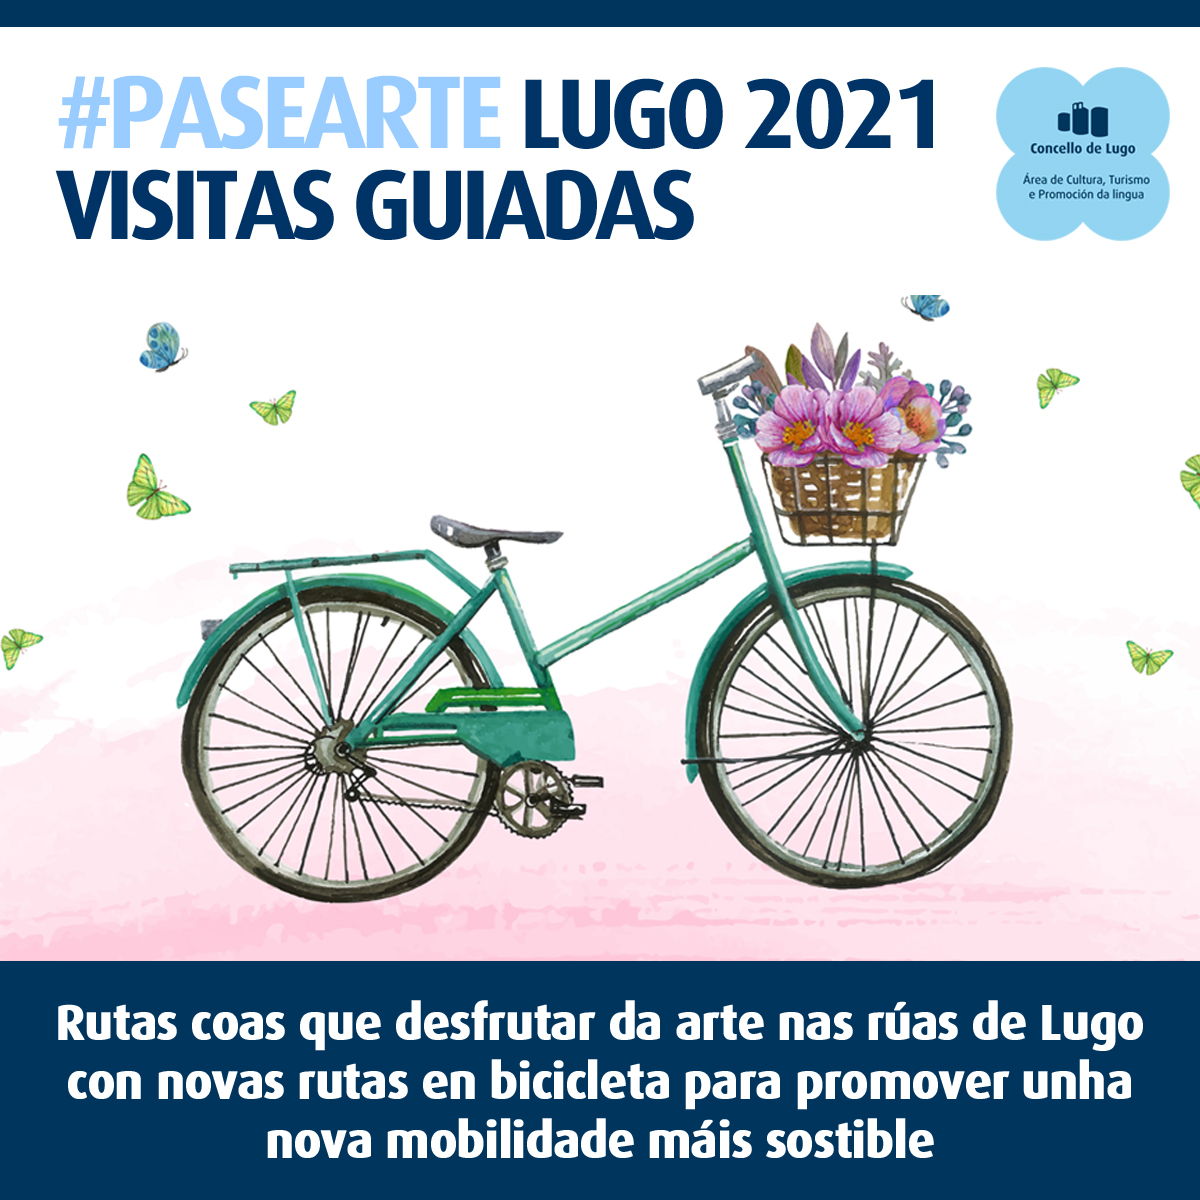 Visita guiada a Lugo - #PaseArte